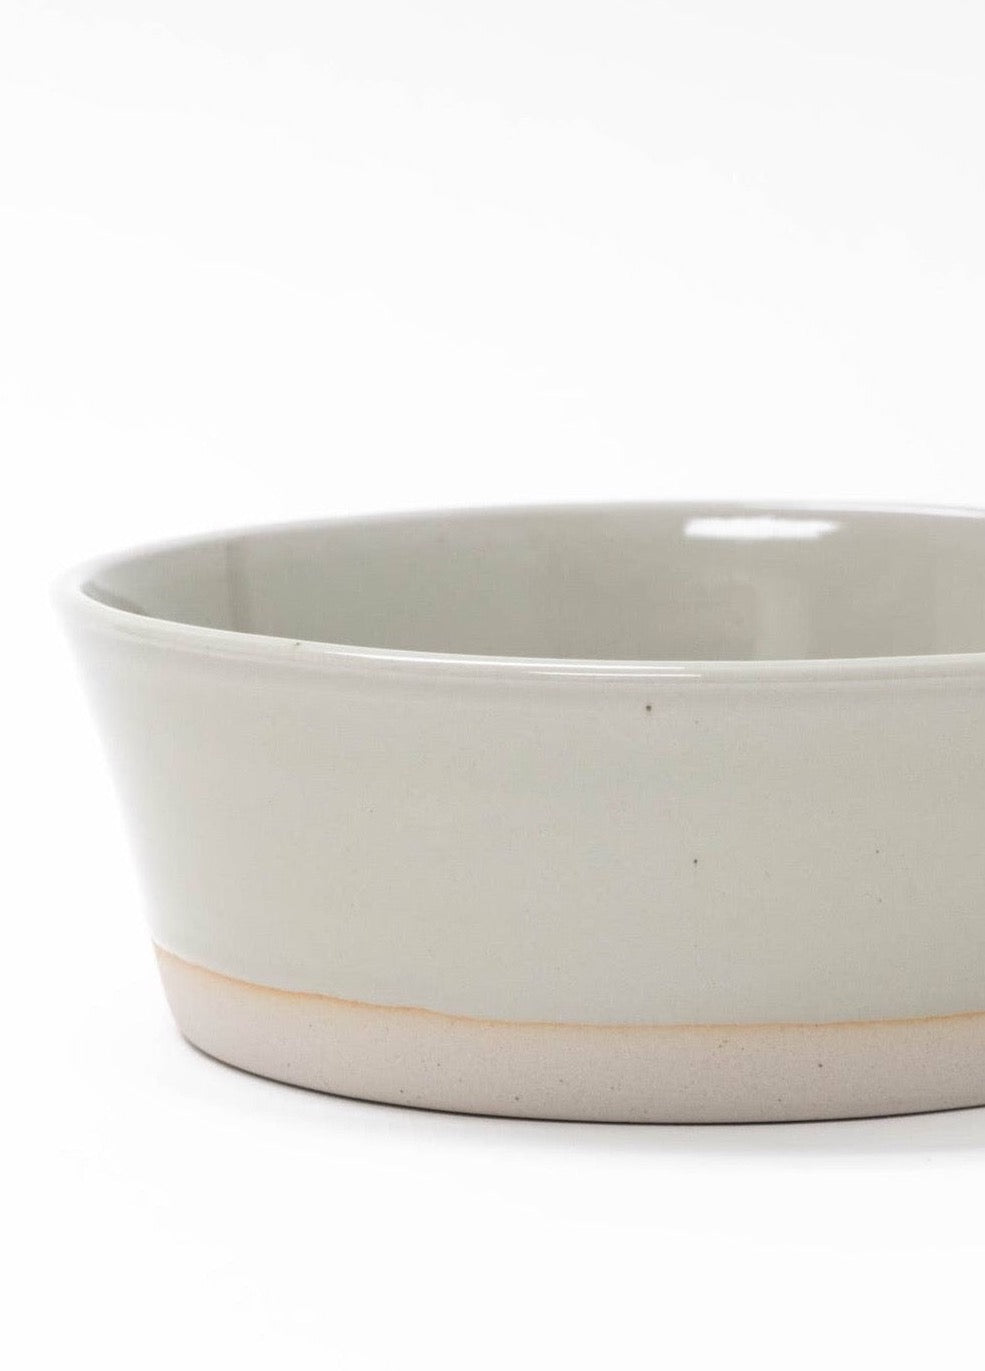 WRF Ceramics | Deep Bowl: Large